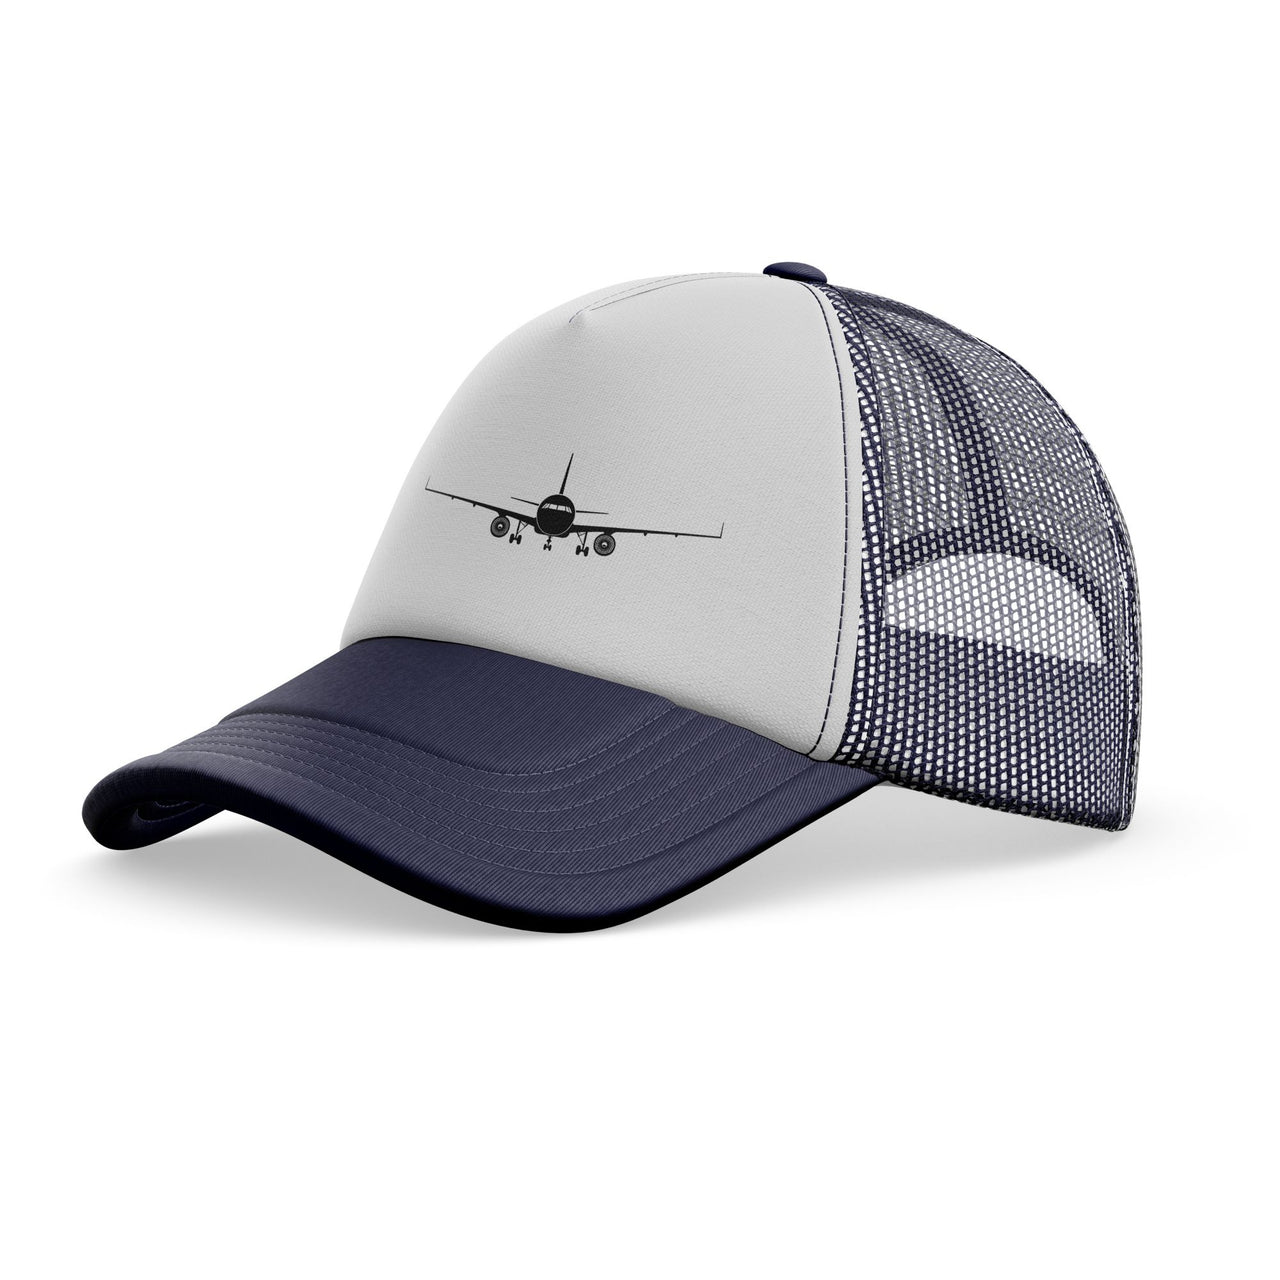 Airbus A320 Silhouette Designed Trucker Caps & Hats